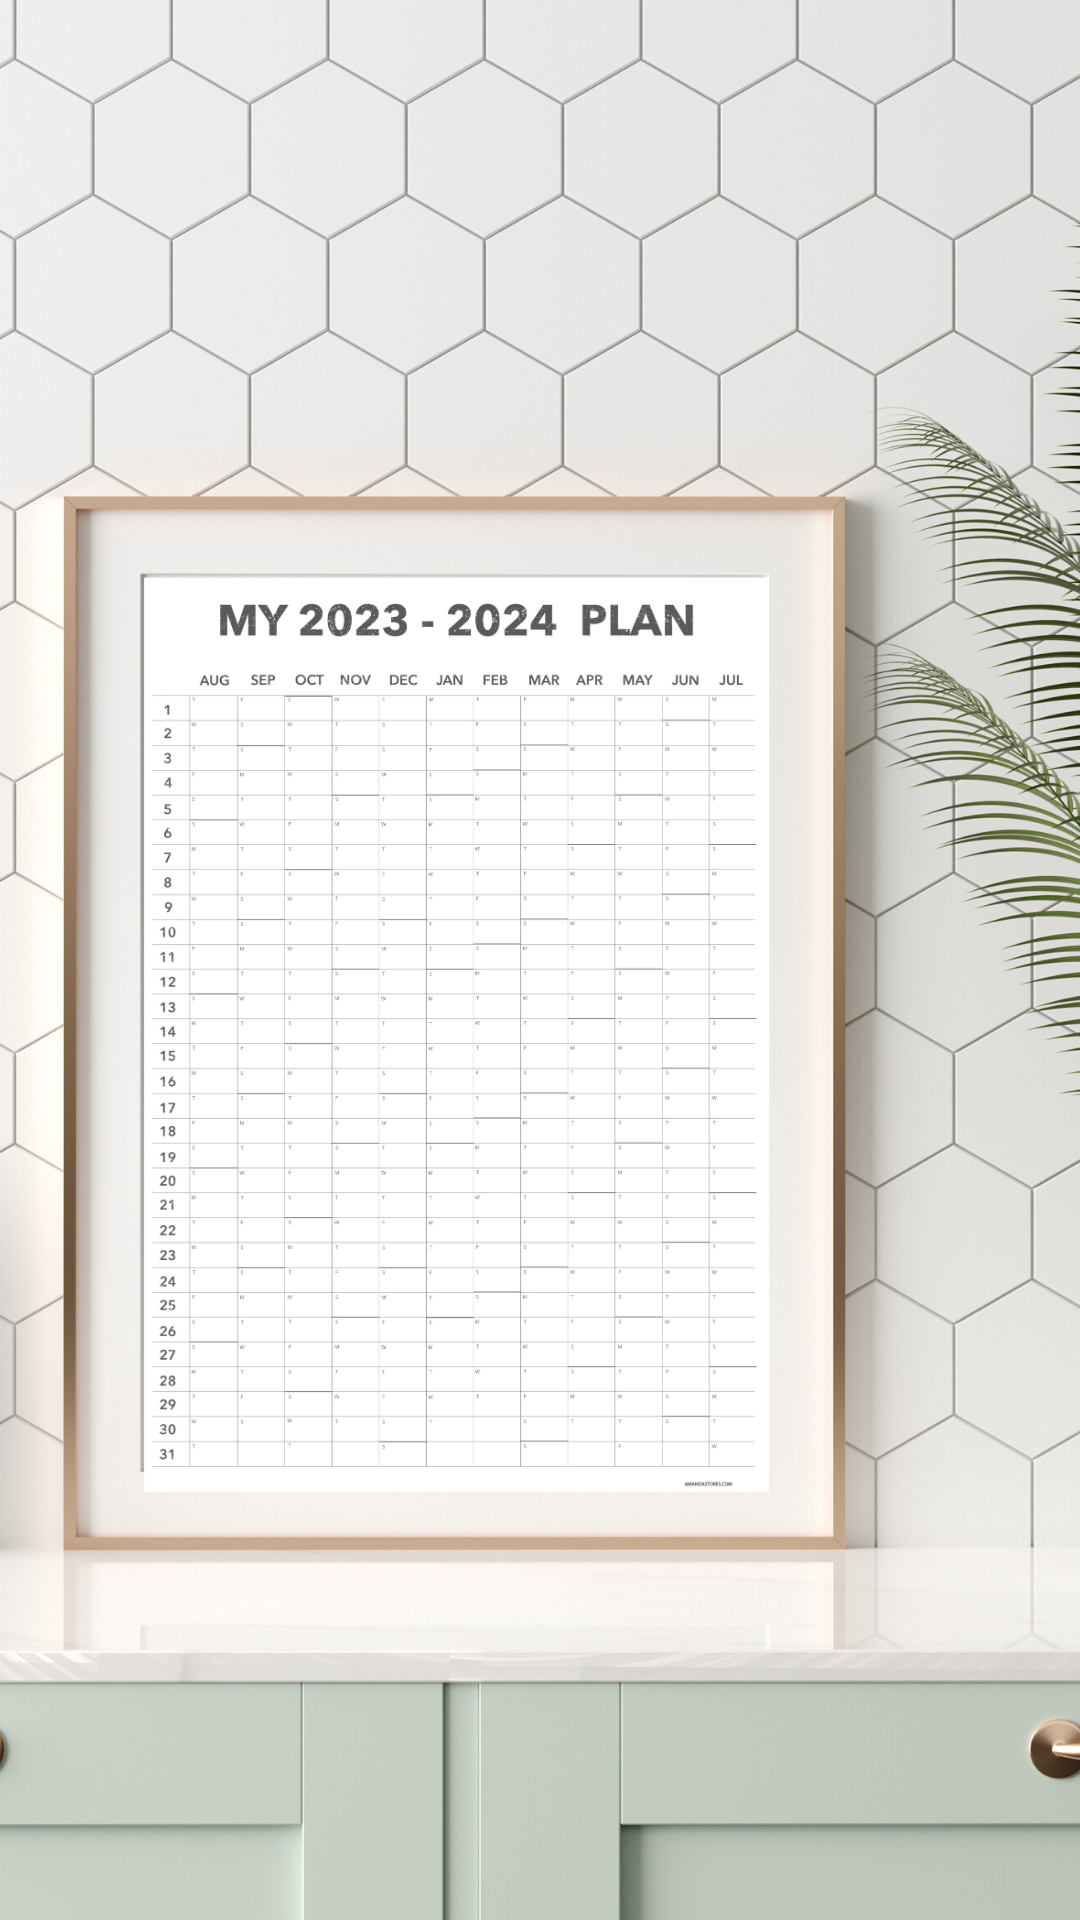 My 2023 - 2024 Plan Wall Calendar - 18" x 24" - PHYSICAL COPY